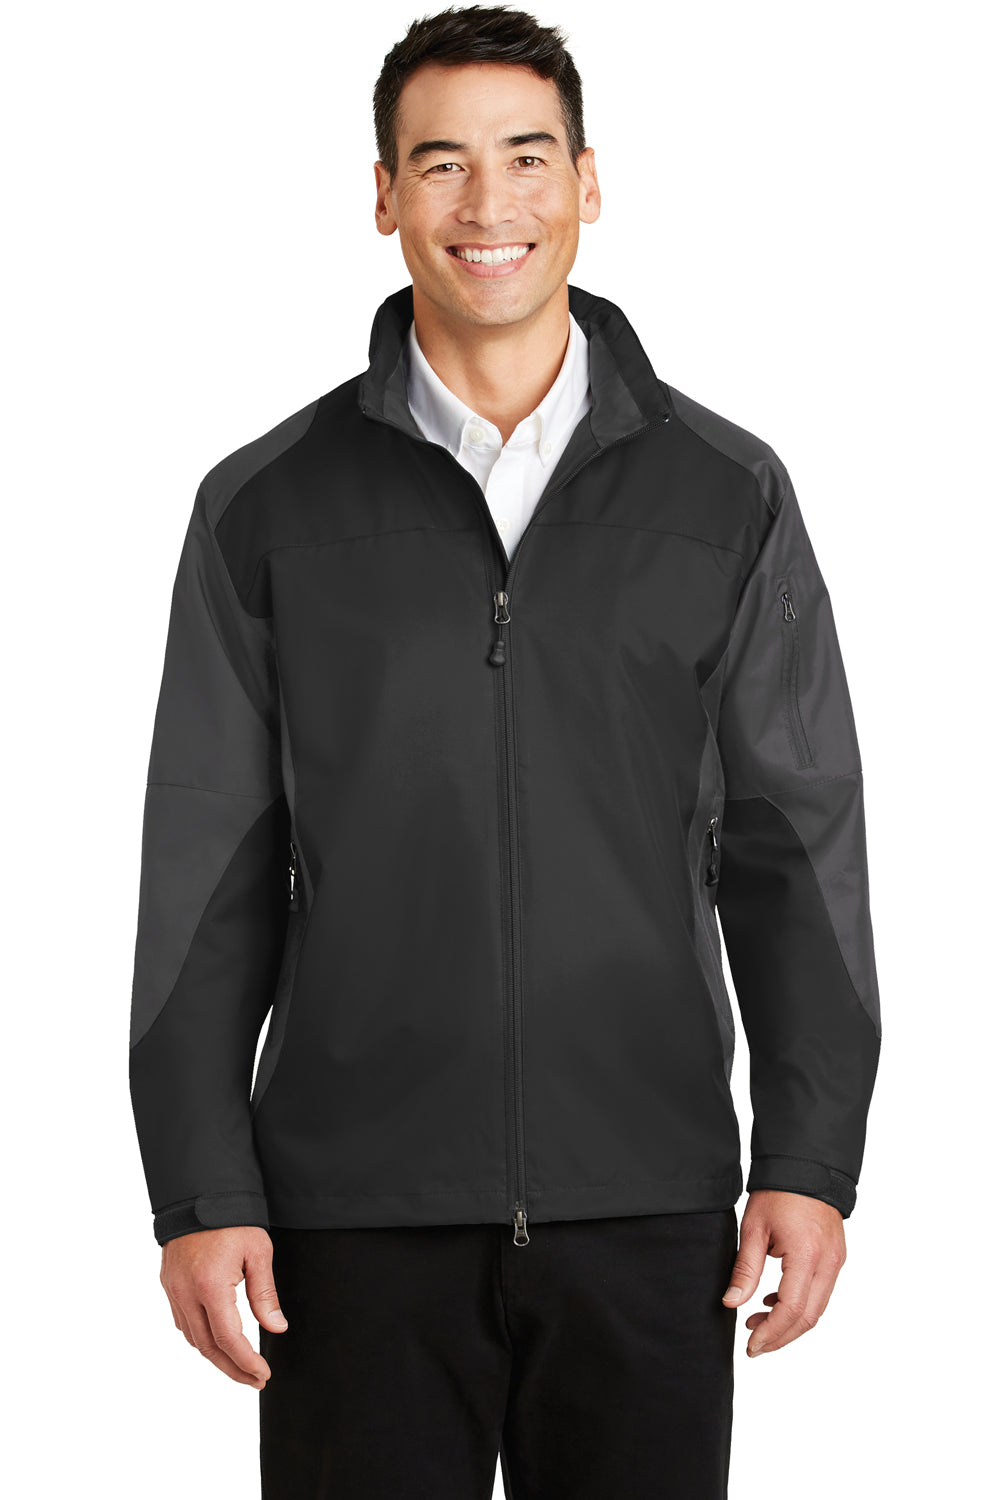 Port Authority J768 Mens Endeavor Wind & Water Resistant Full Zip Hooded Jacket Black/Grey Front